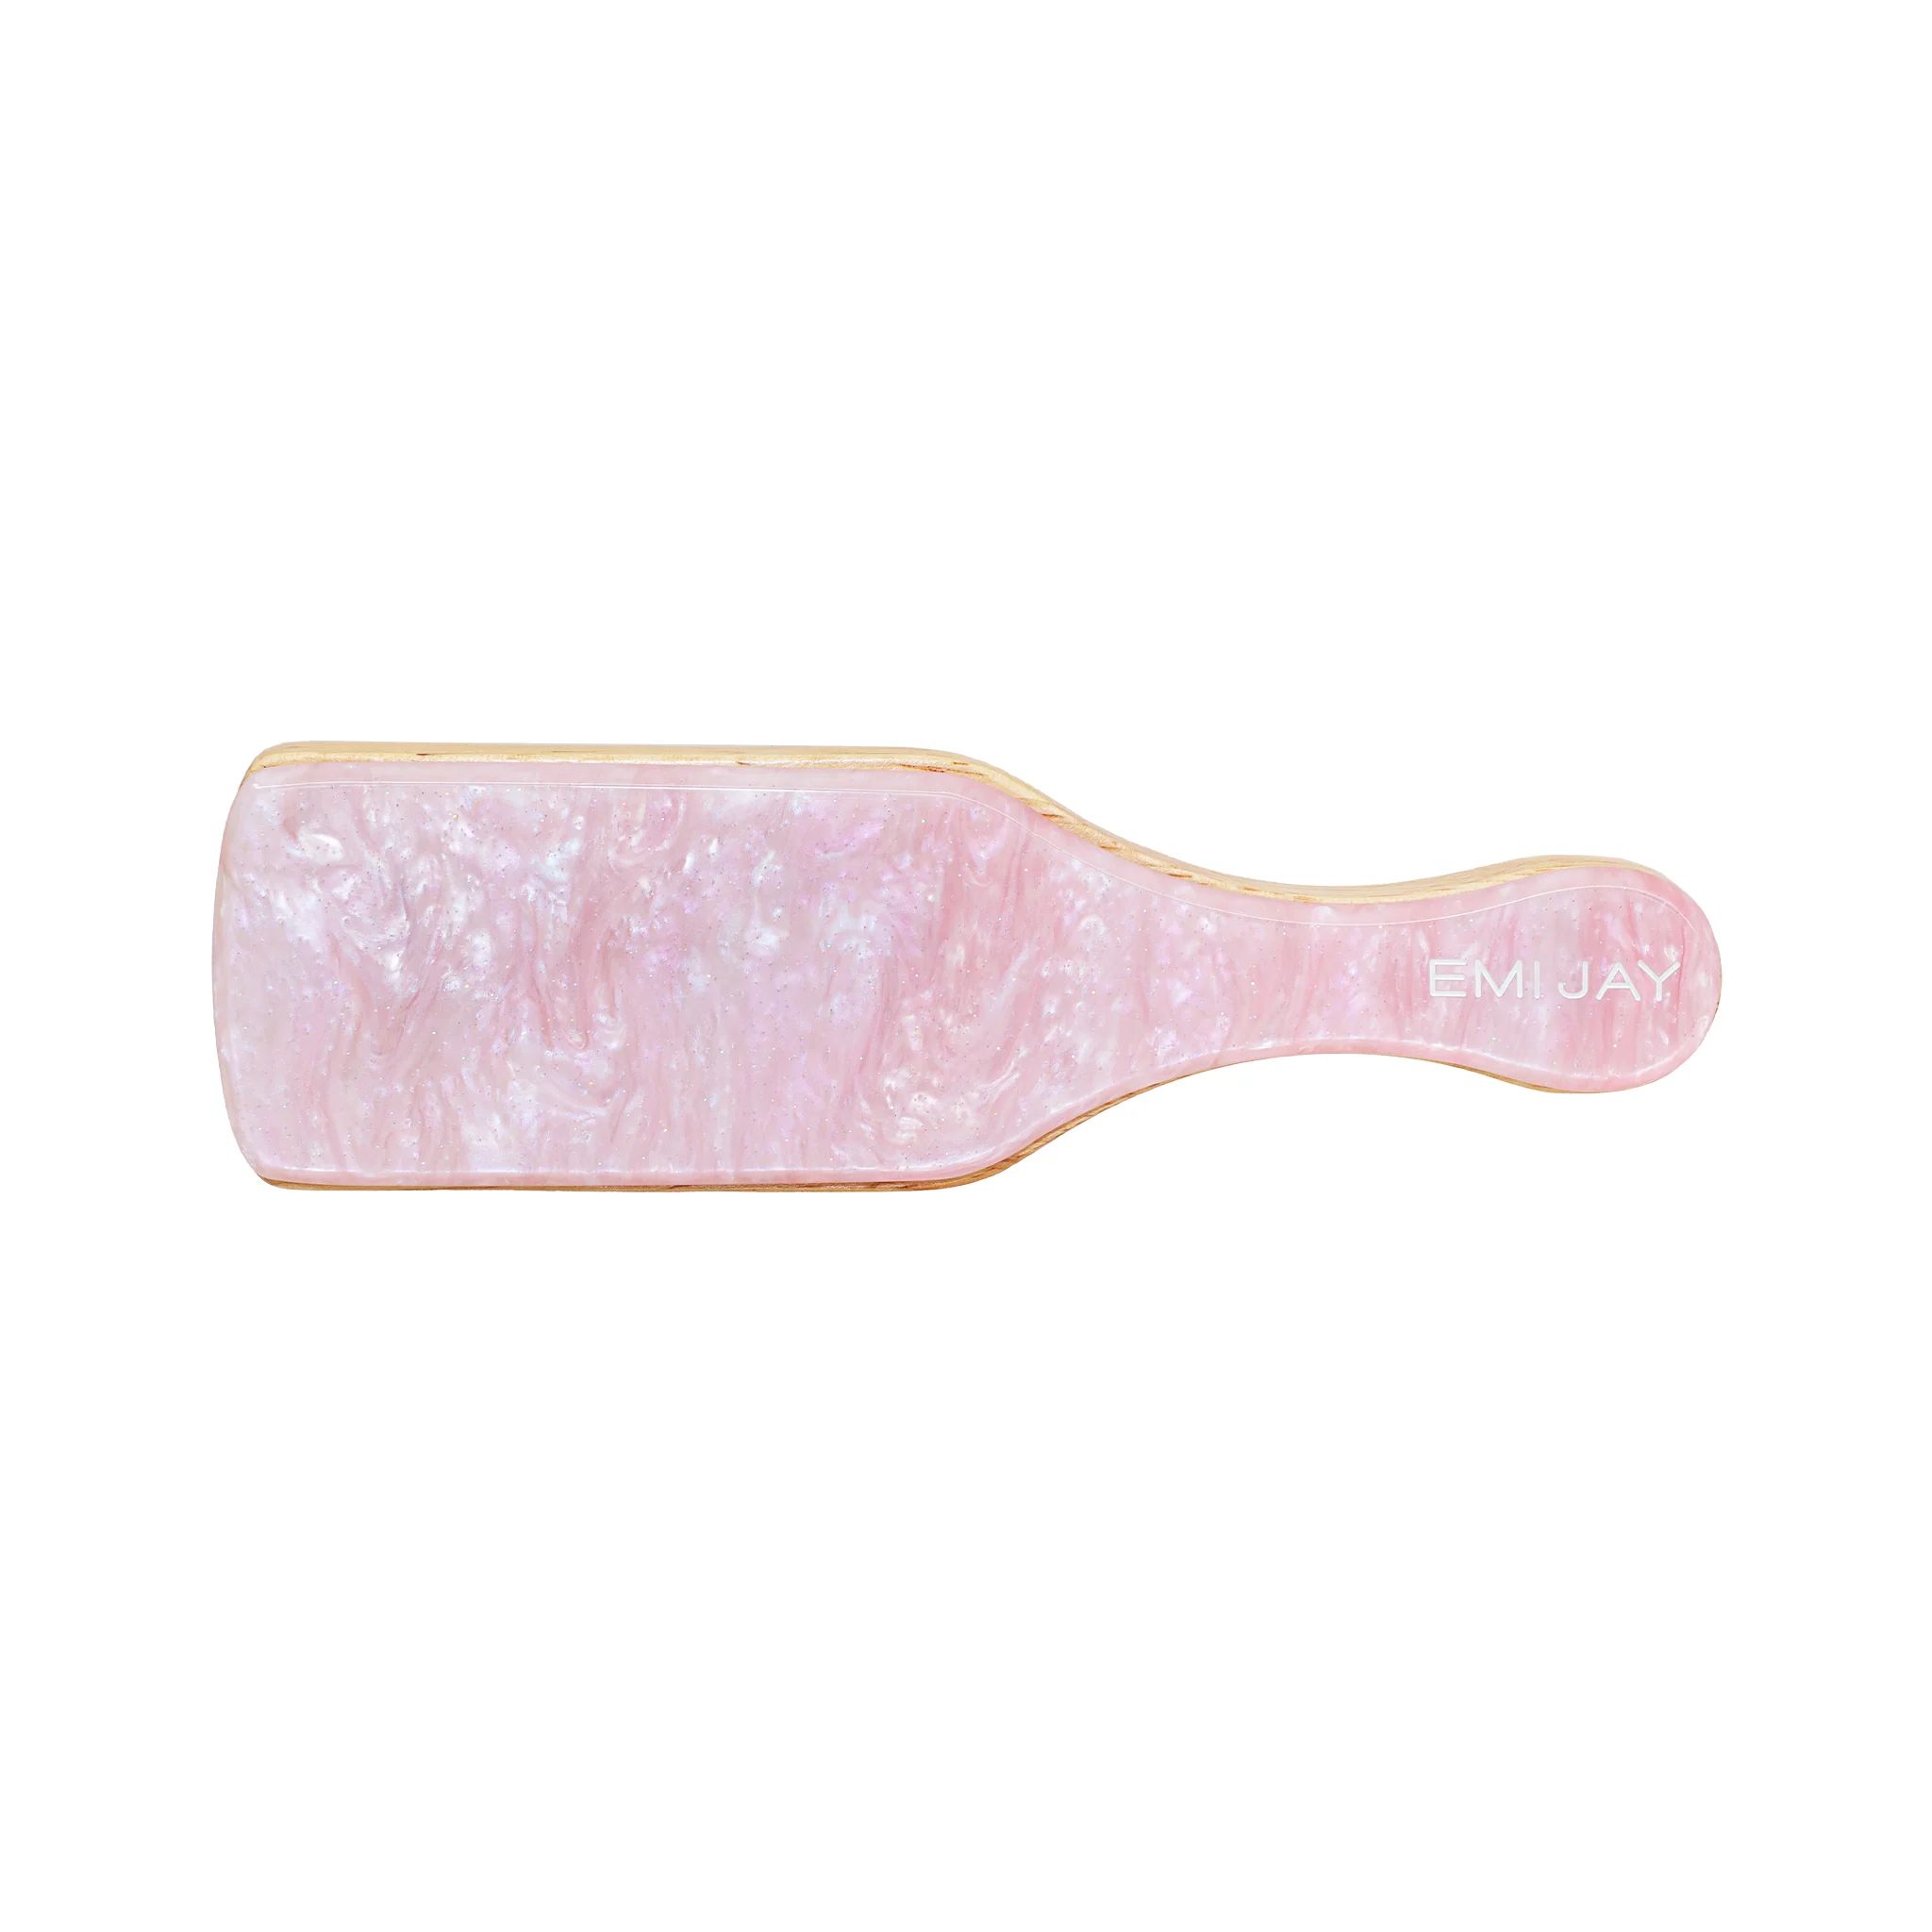 Mini Boar Bristle Brush in Pink Sugar | Emi Jay